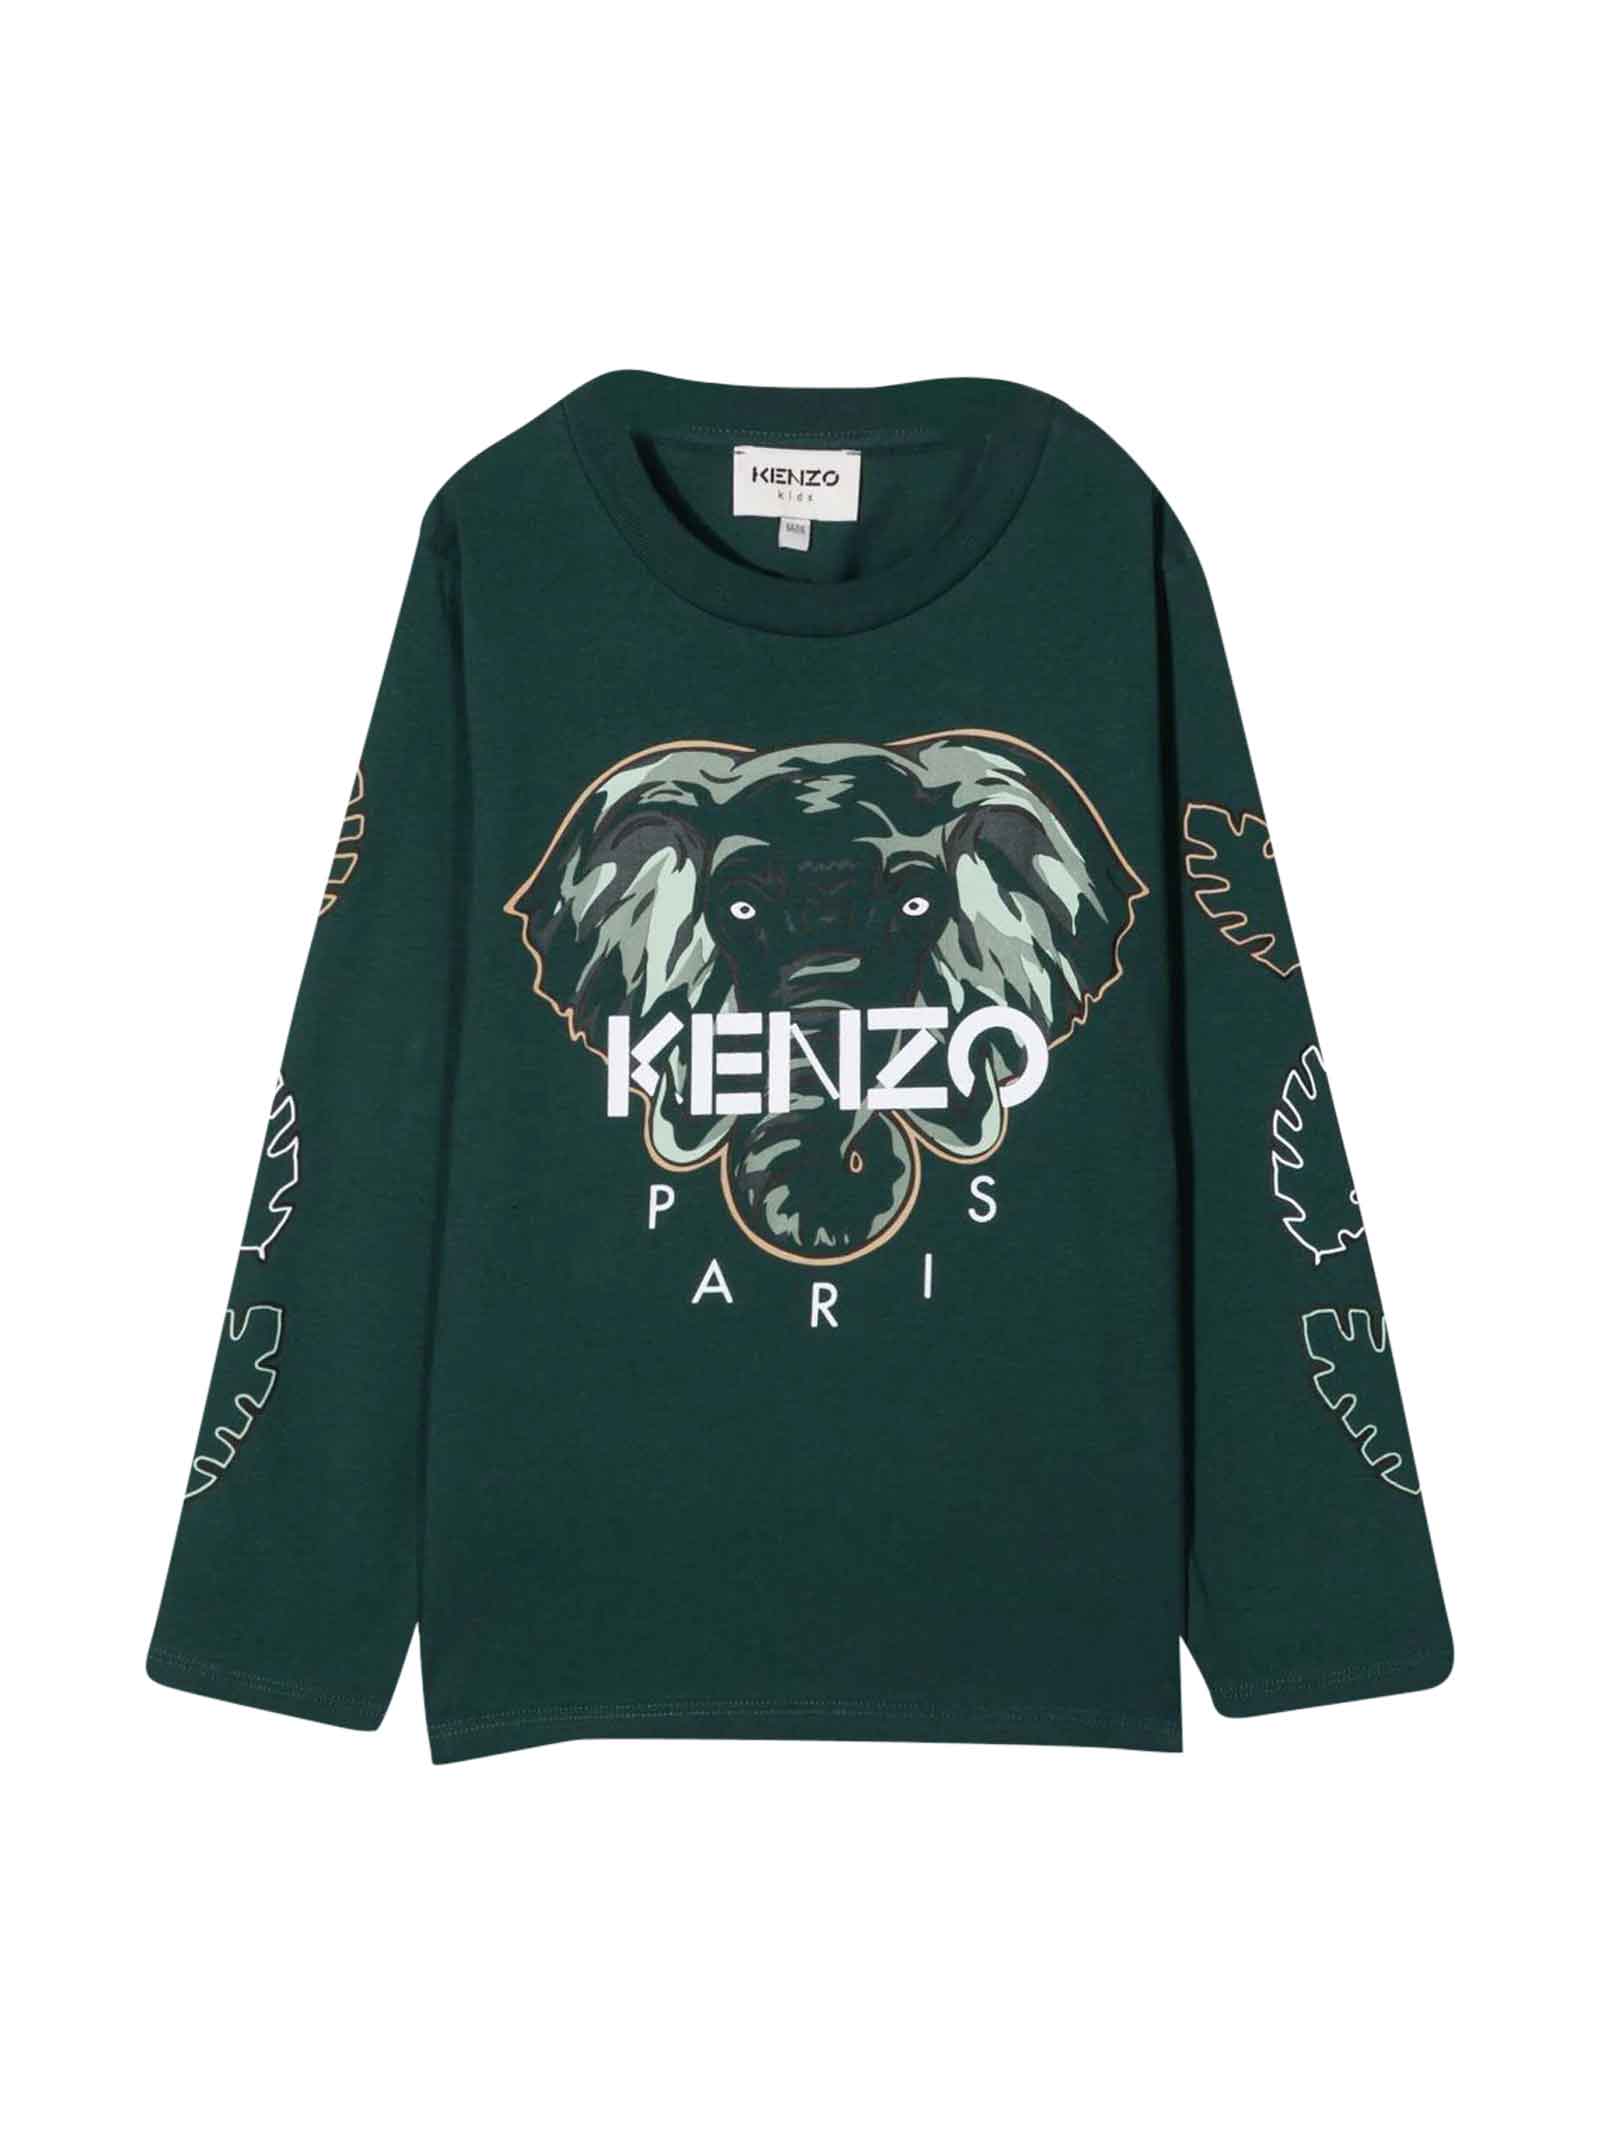 Kenzo Kids Green Unisex T-shirt